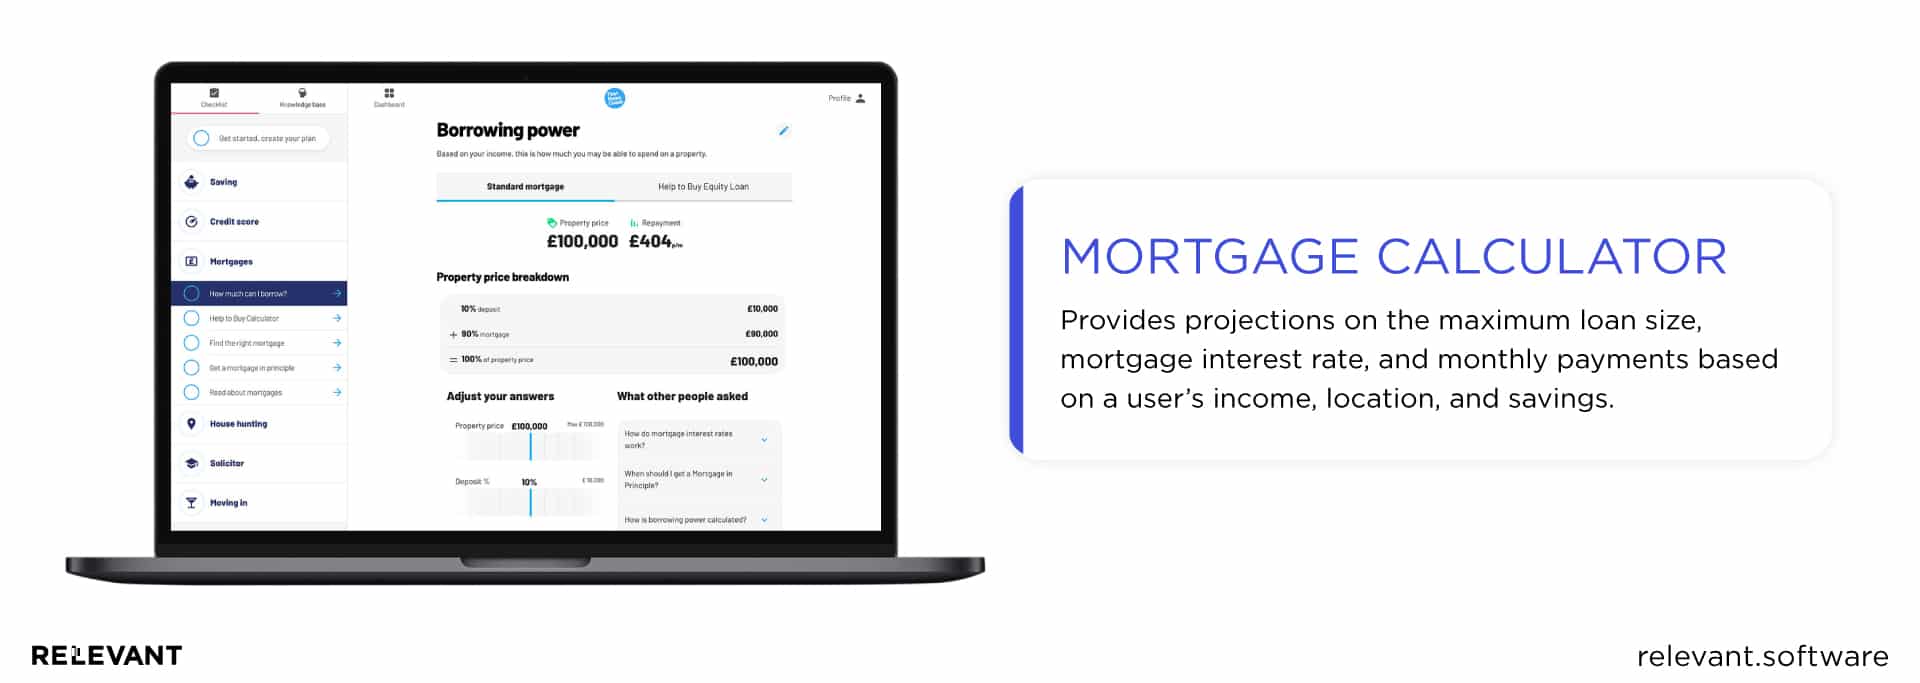 mortgage calculator in mortgage app